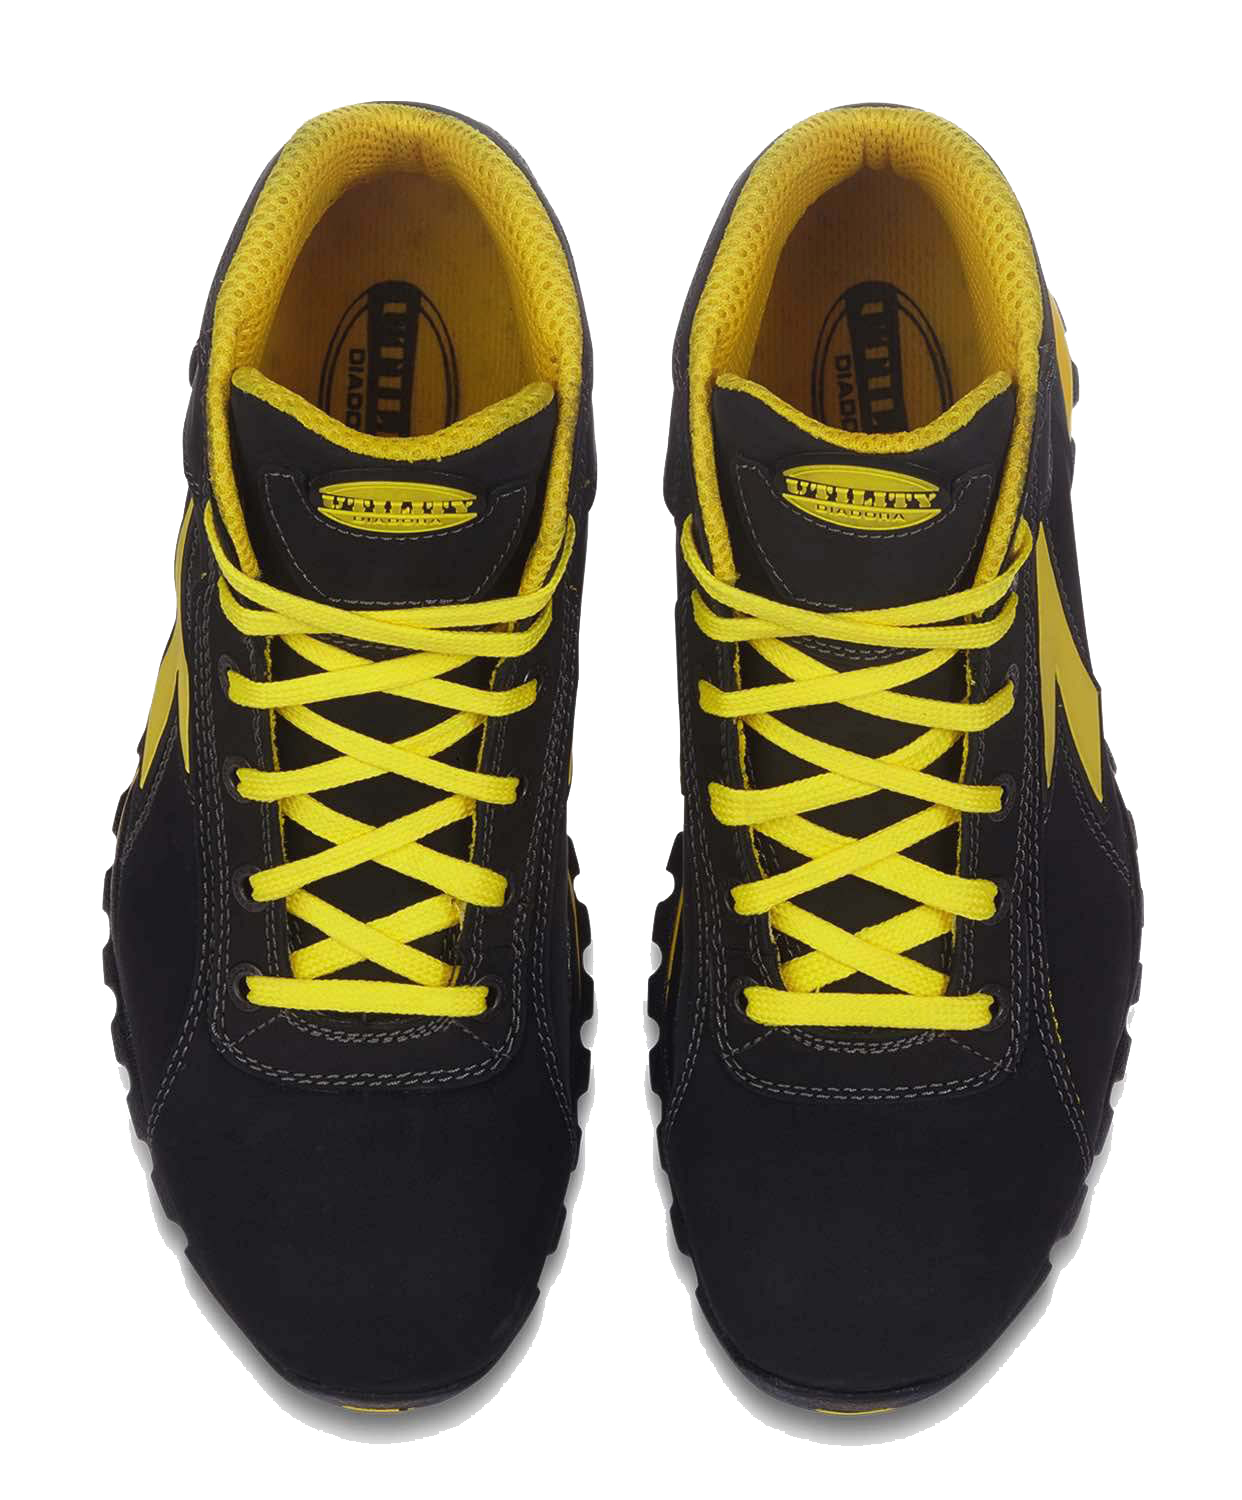 Chaussures de sécurité hautes GLOVE II HIGH S3 SRA HRO noir/jaune P37 - DIADORA SPA - 701.170234